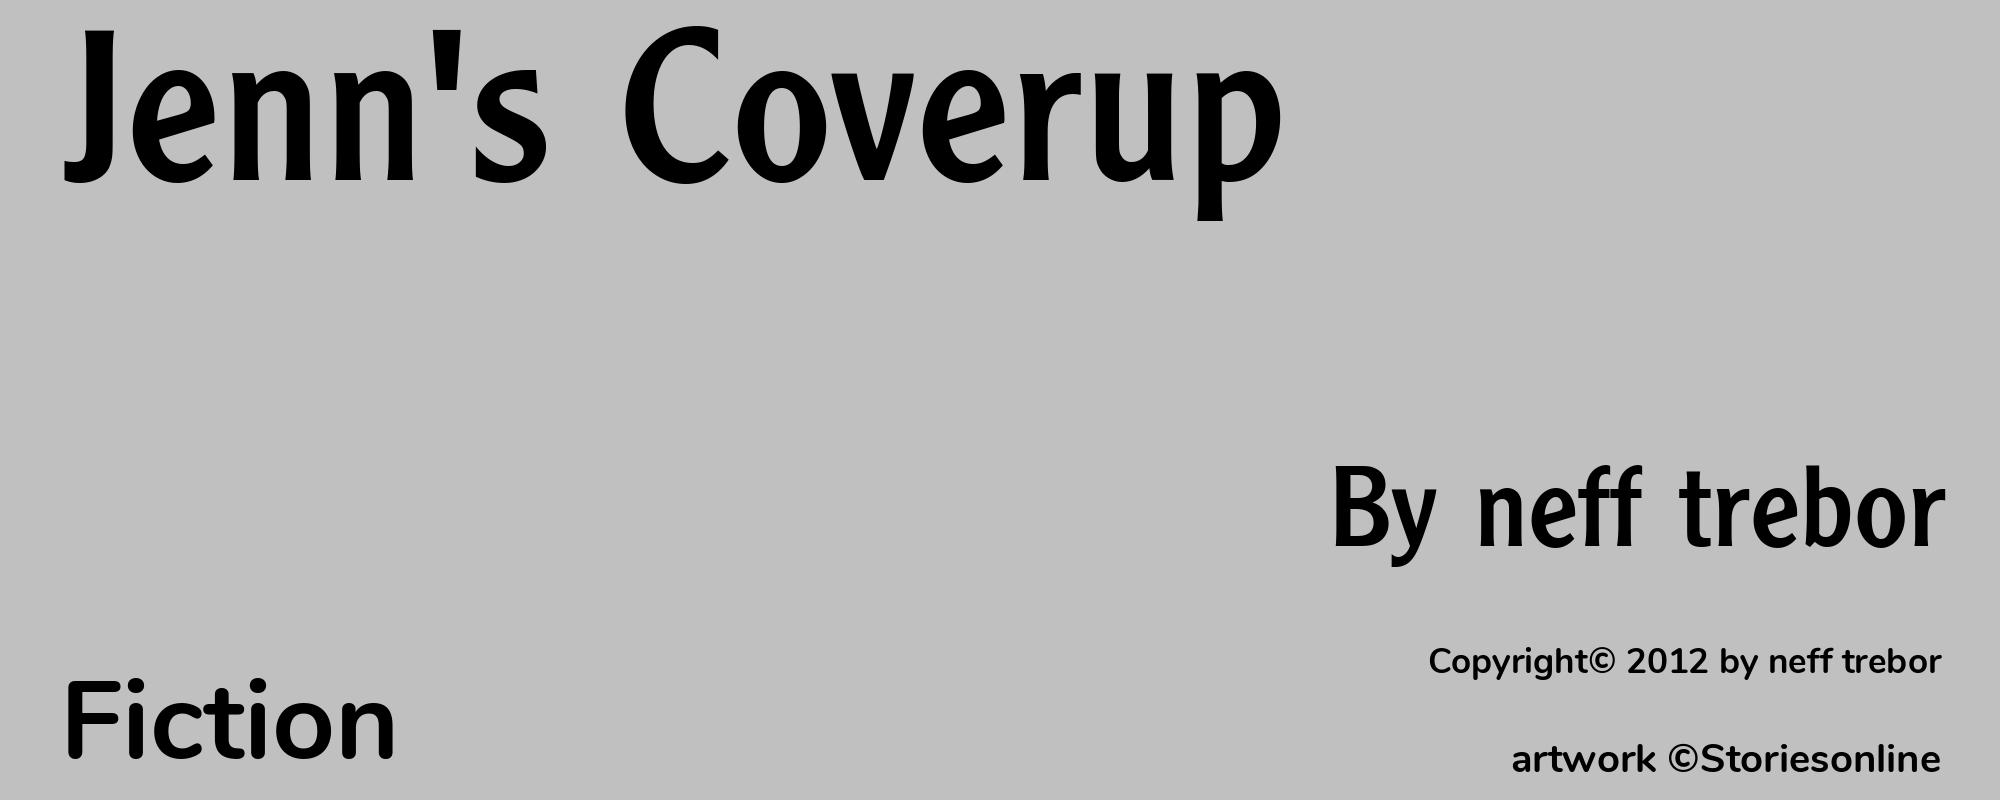 Jenn's Coverup - Cover